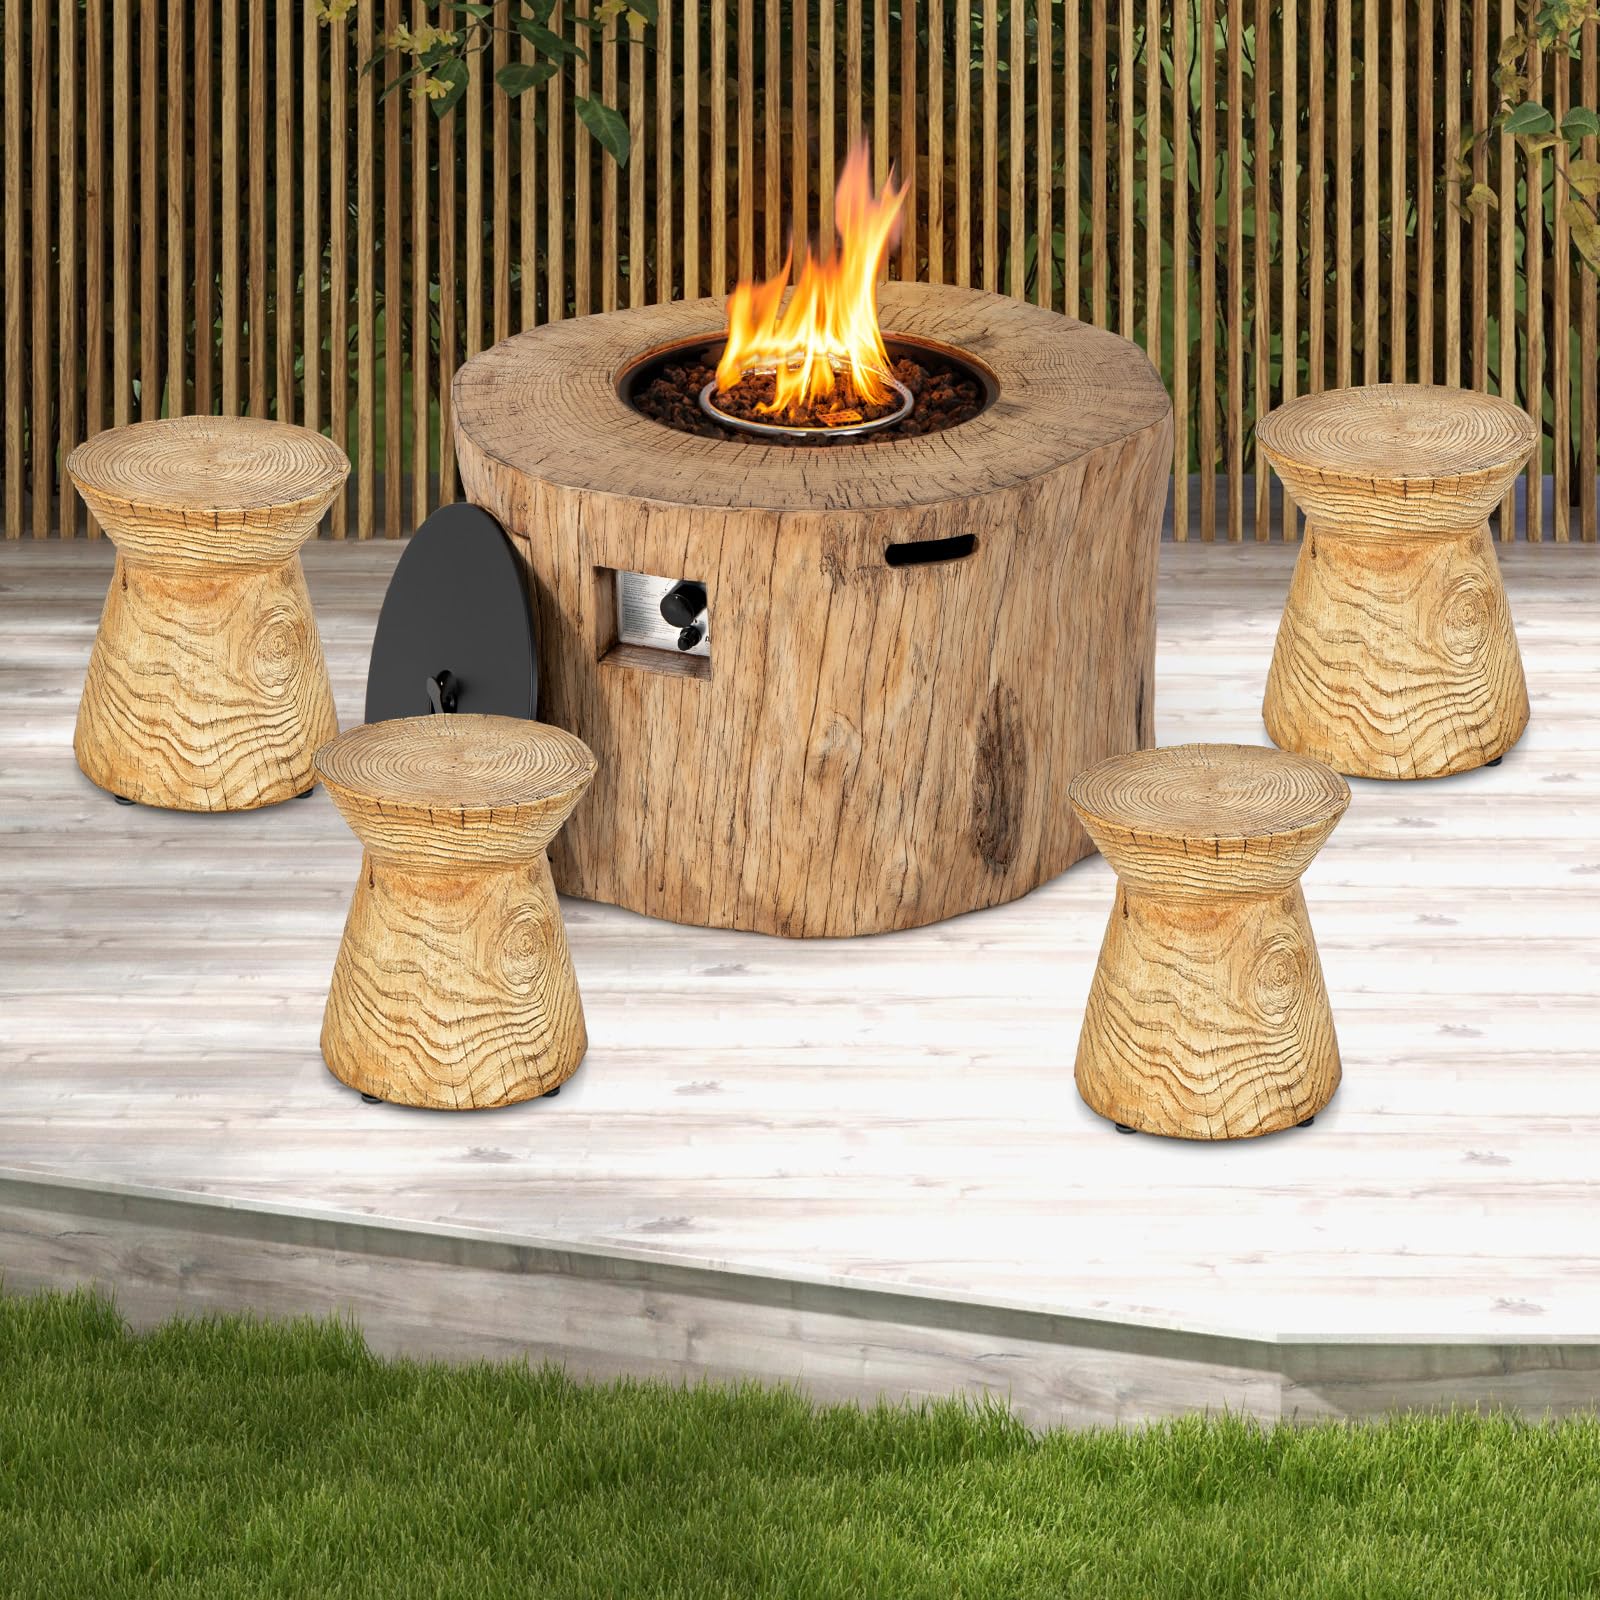 Giantex Hourglass-Shaped Outdoor Side Table - 14.5”D x 17”H Hollow Garden Stool W/Wood Grain